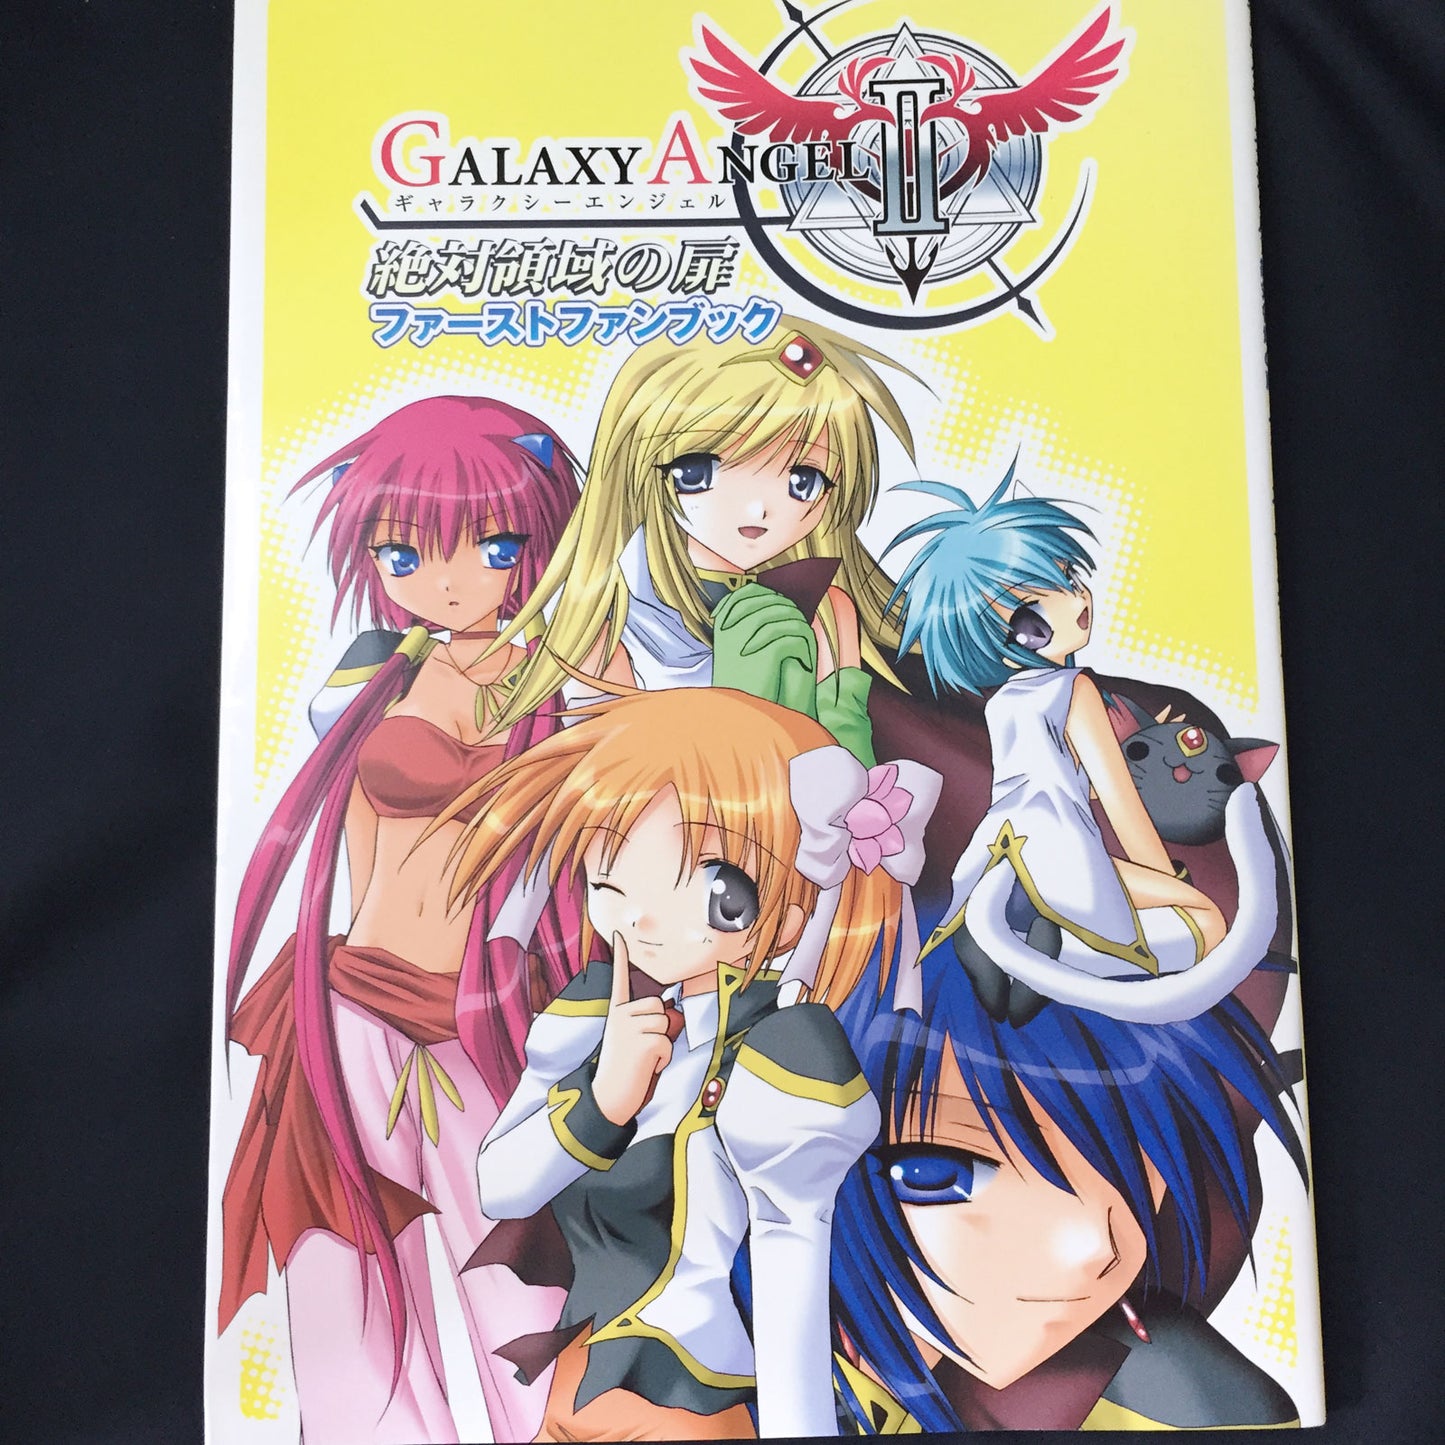 Galaxy Angel 2 Zettai Ryoiki no Tobira 1st Fan Book